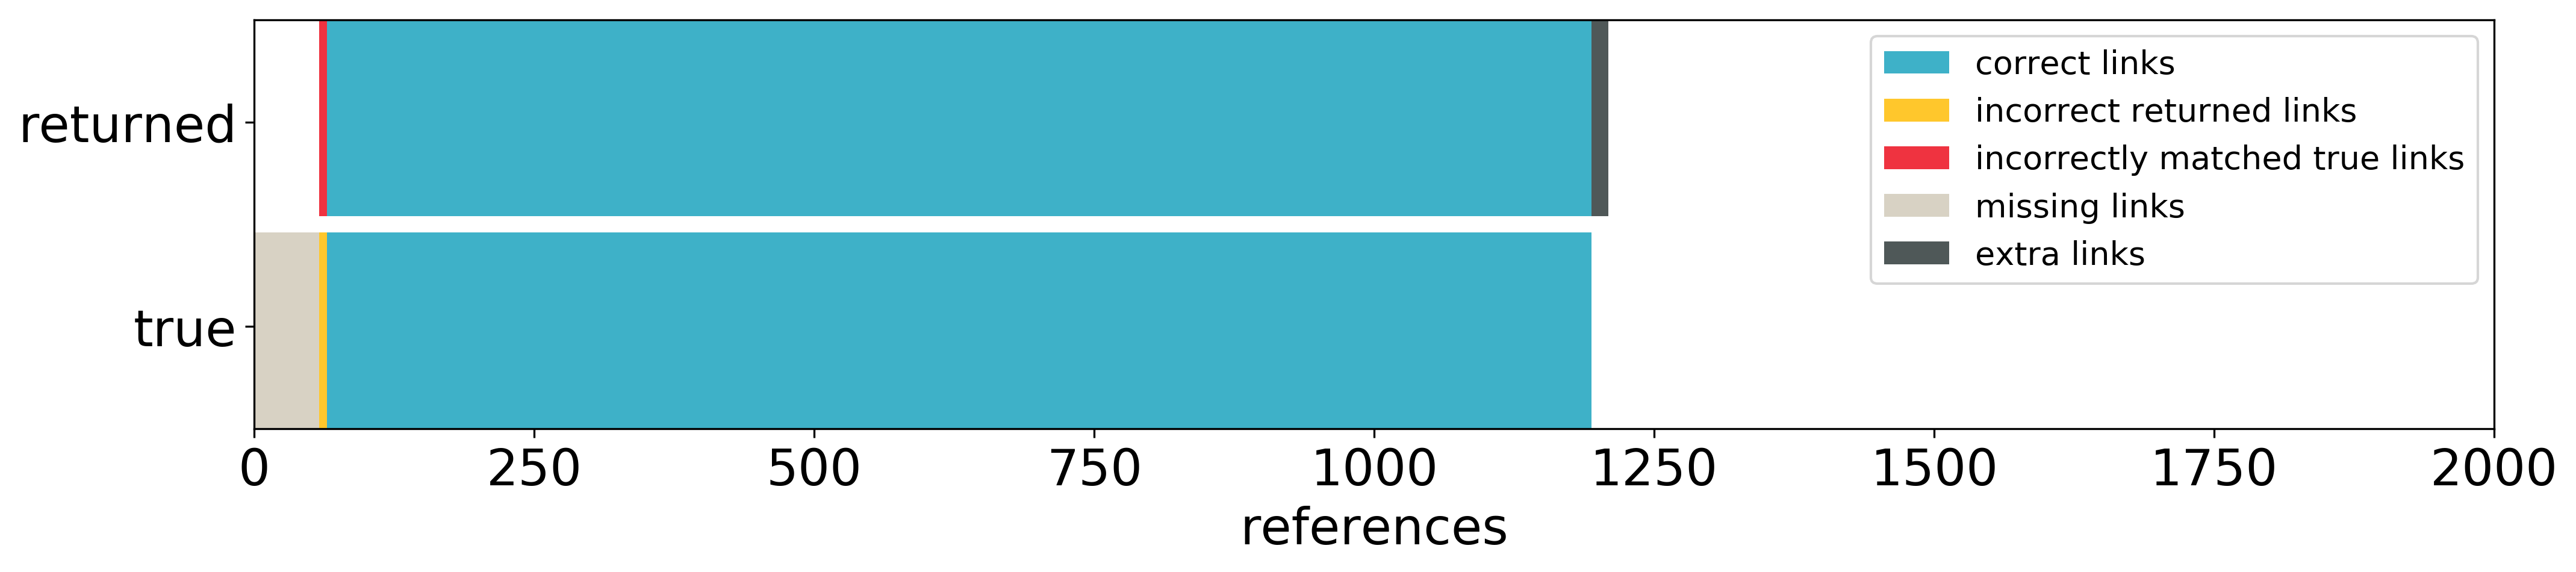 references errors distribution